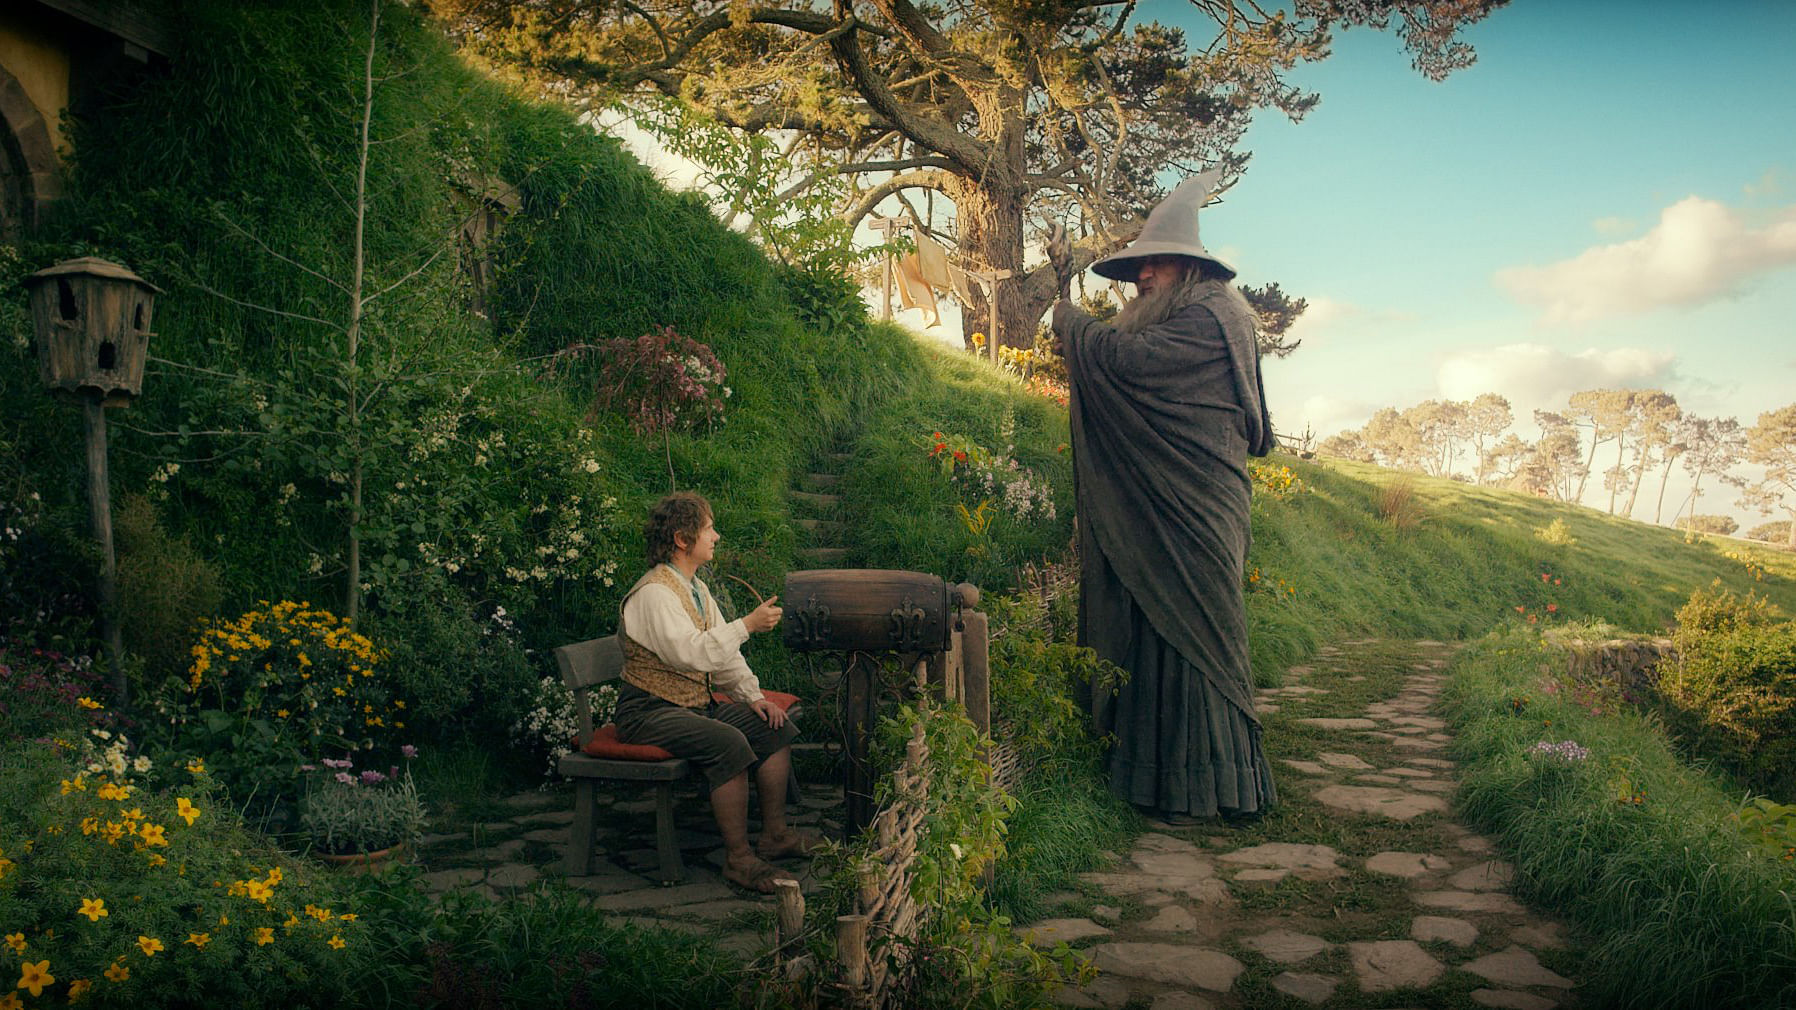 Bilbo and Gandalf doing what they do best: bonding.